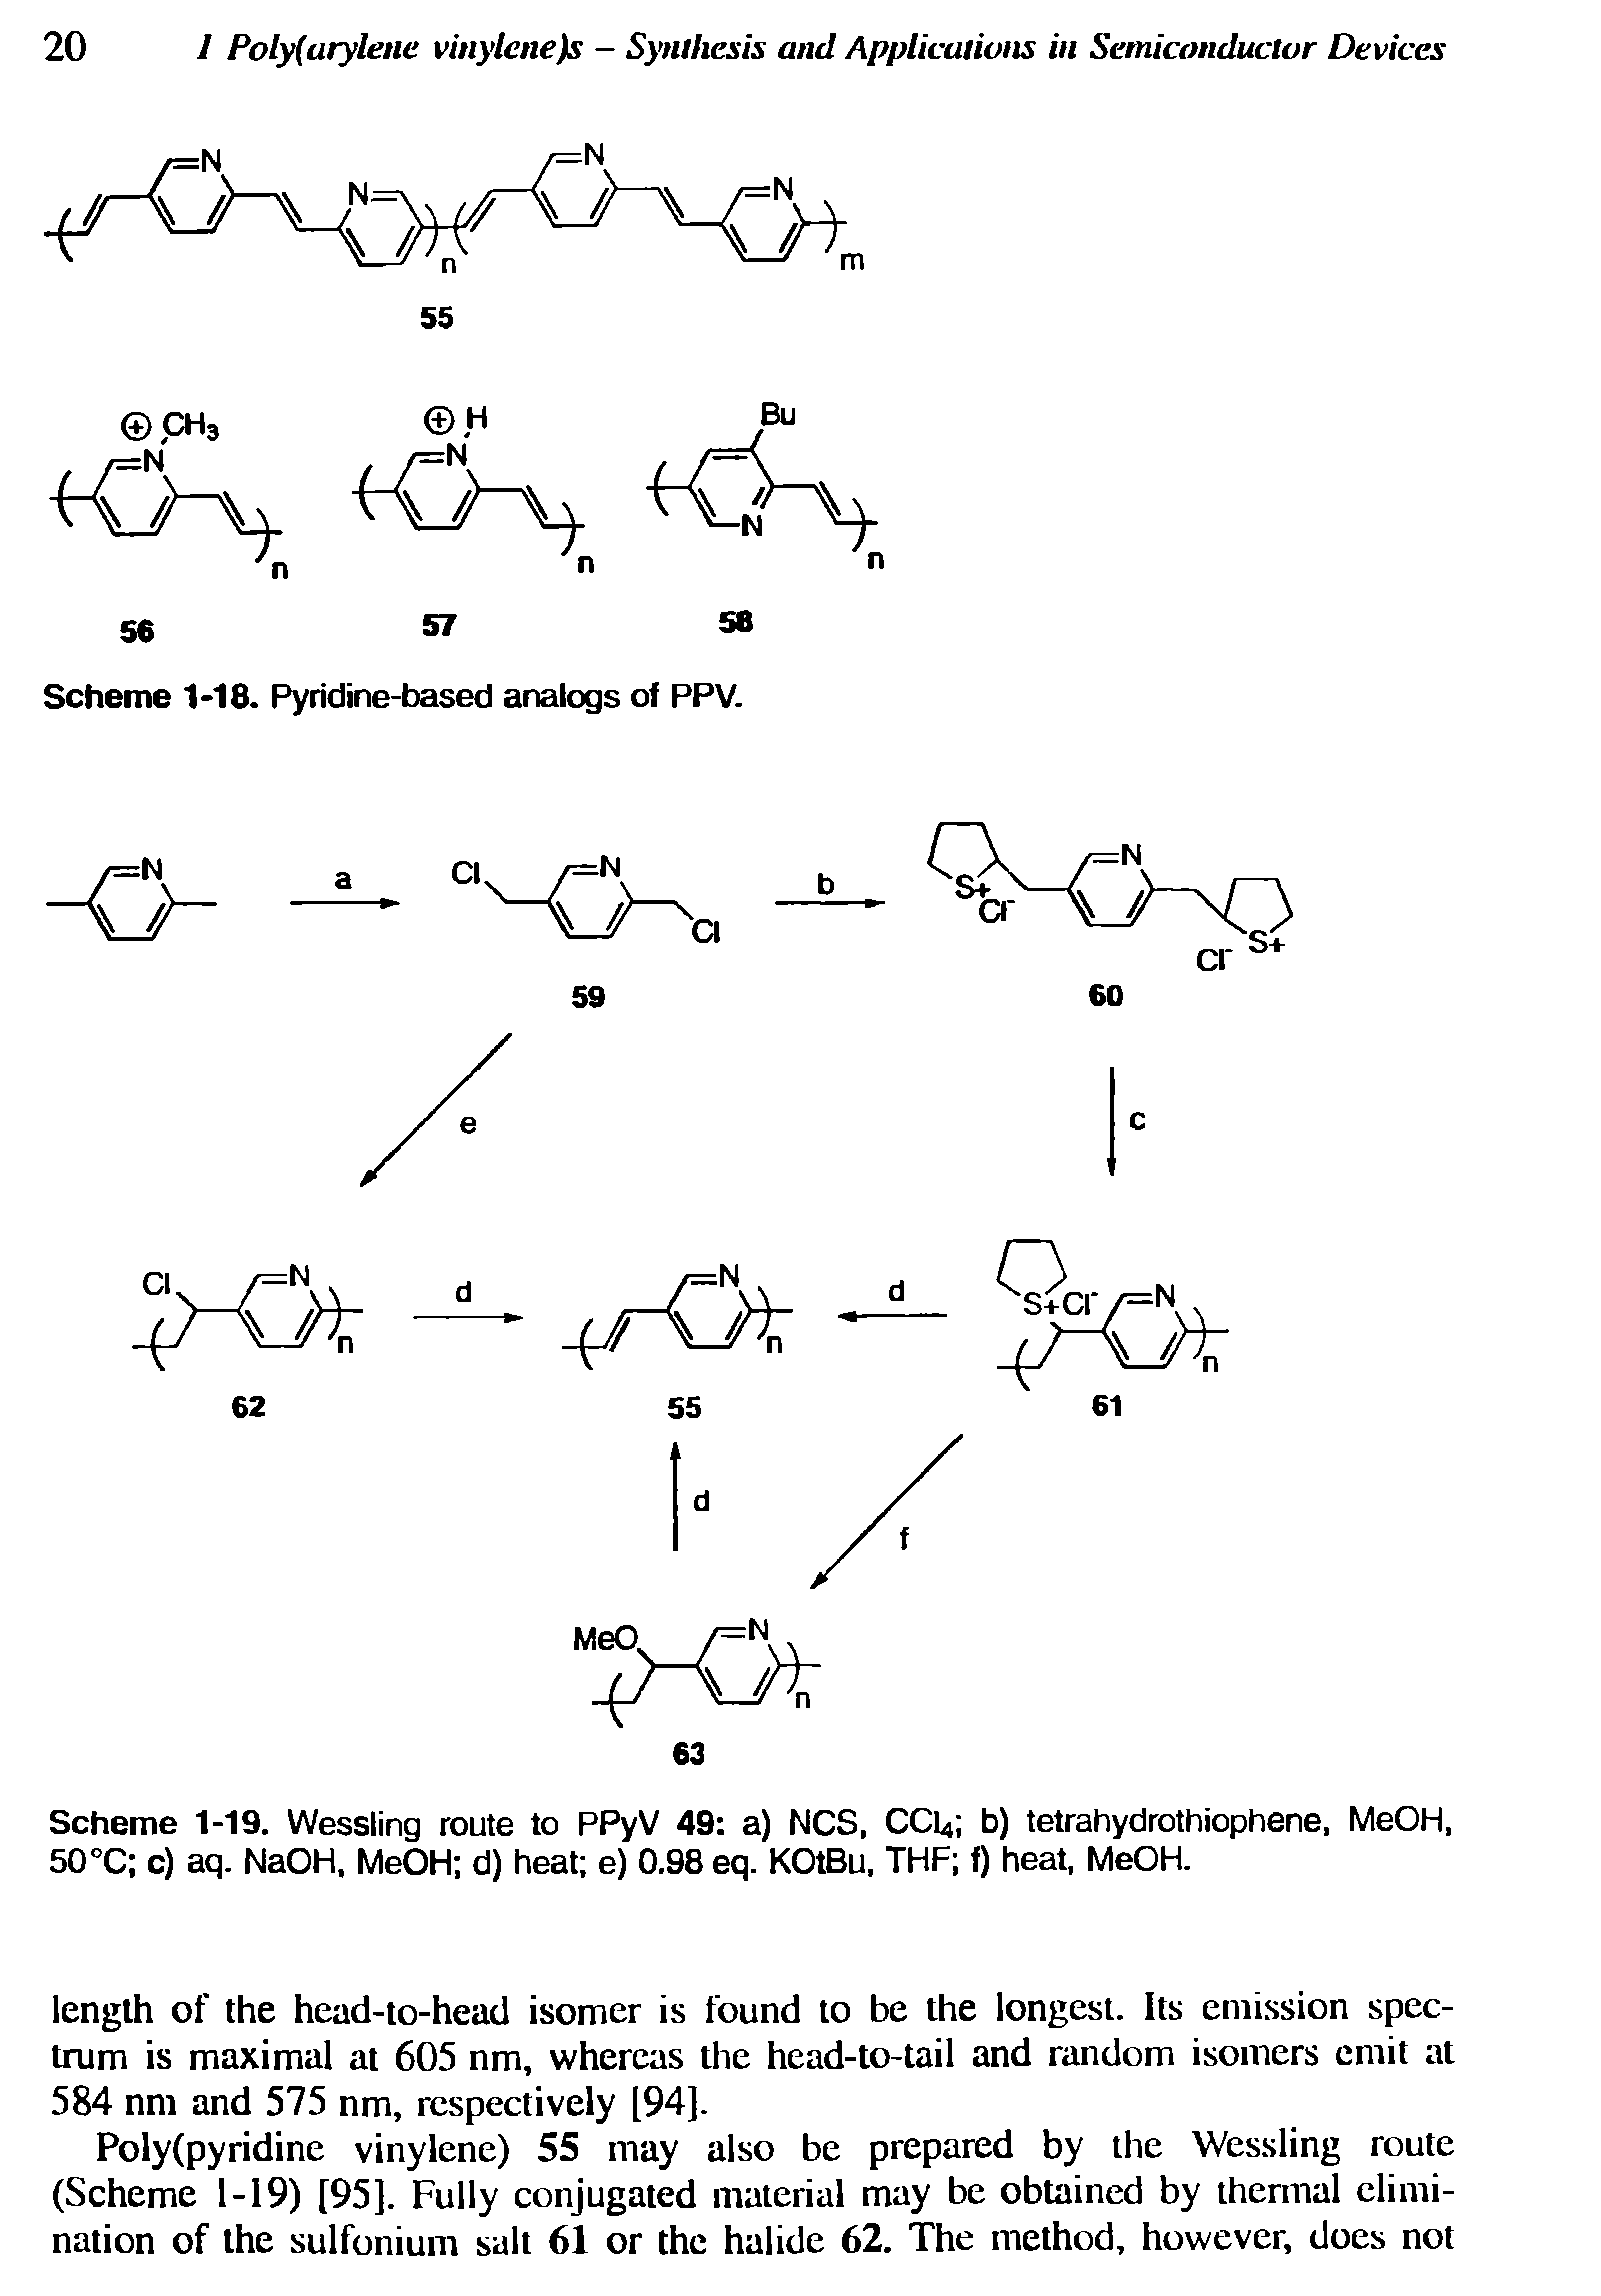 Scheme 1-19. Wessling route to PPyV 49 a) NCS, CCU b) tetrahydrothiophene, MeOH, 50 °C c) aq. NaOH, MeOH d) heat e) 0.98 eq. KOtBu, THF f) heat, MeOH.